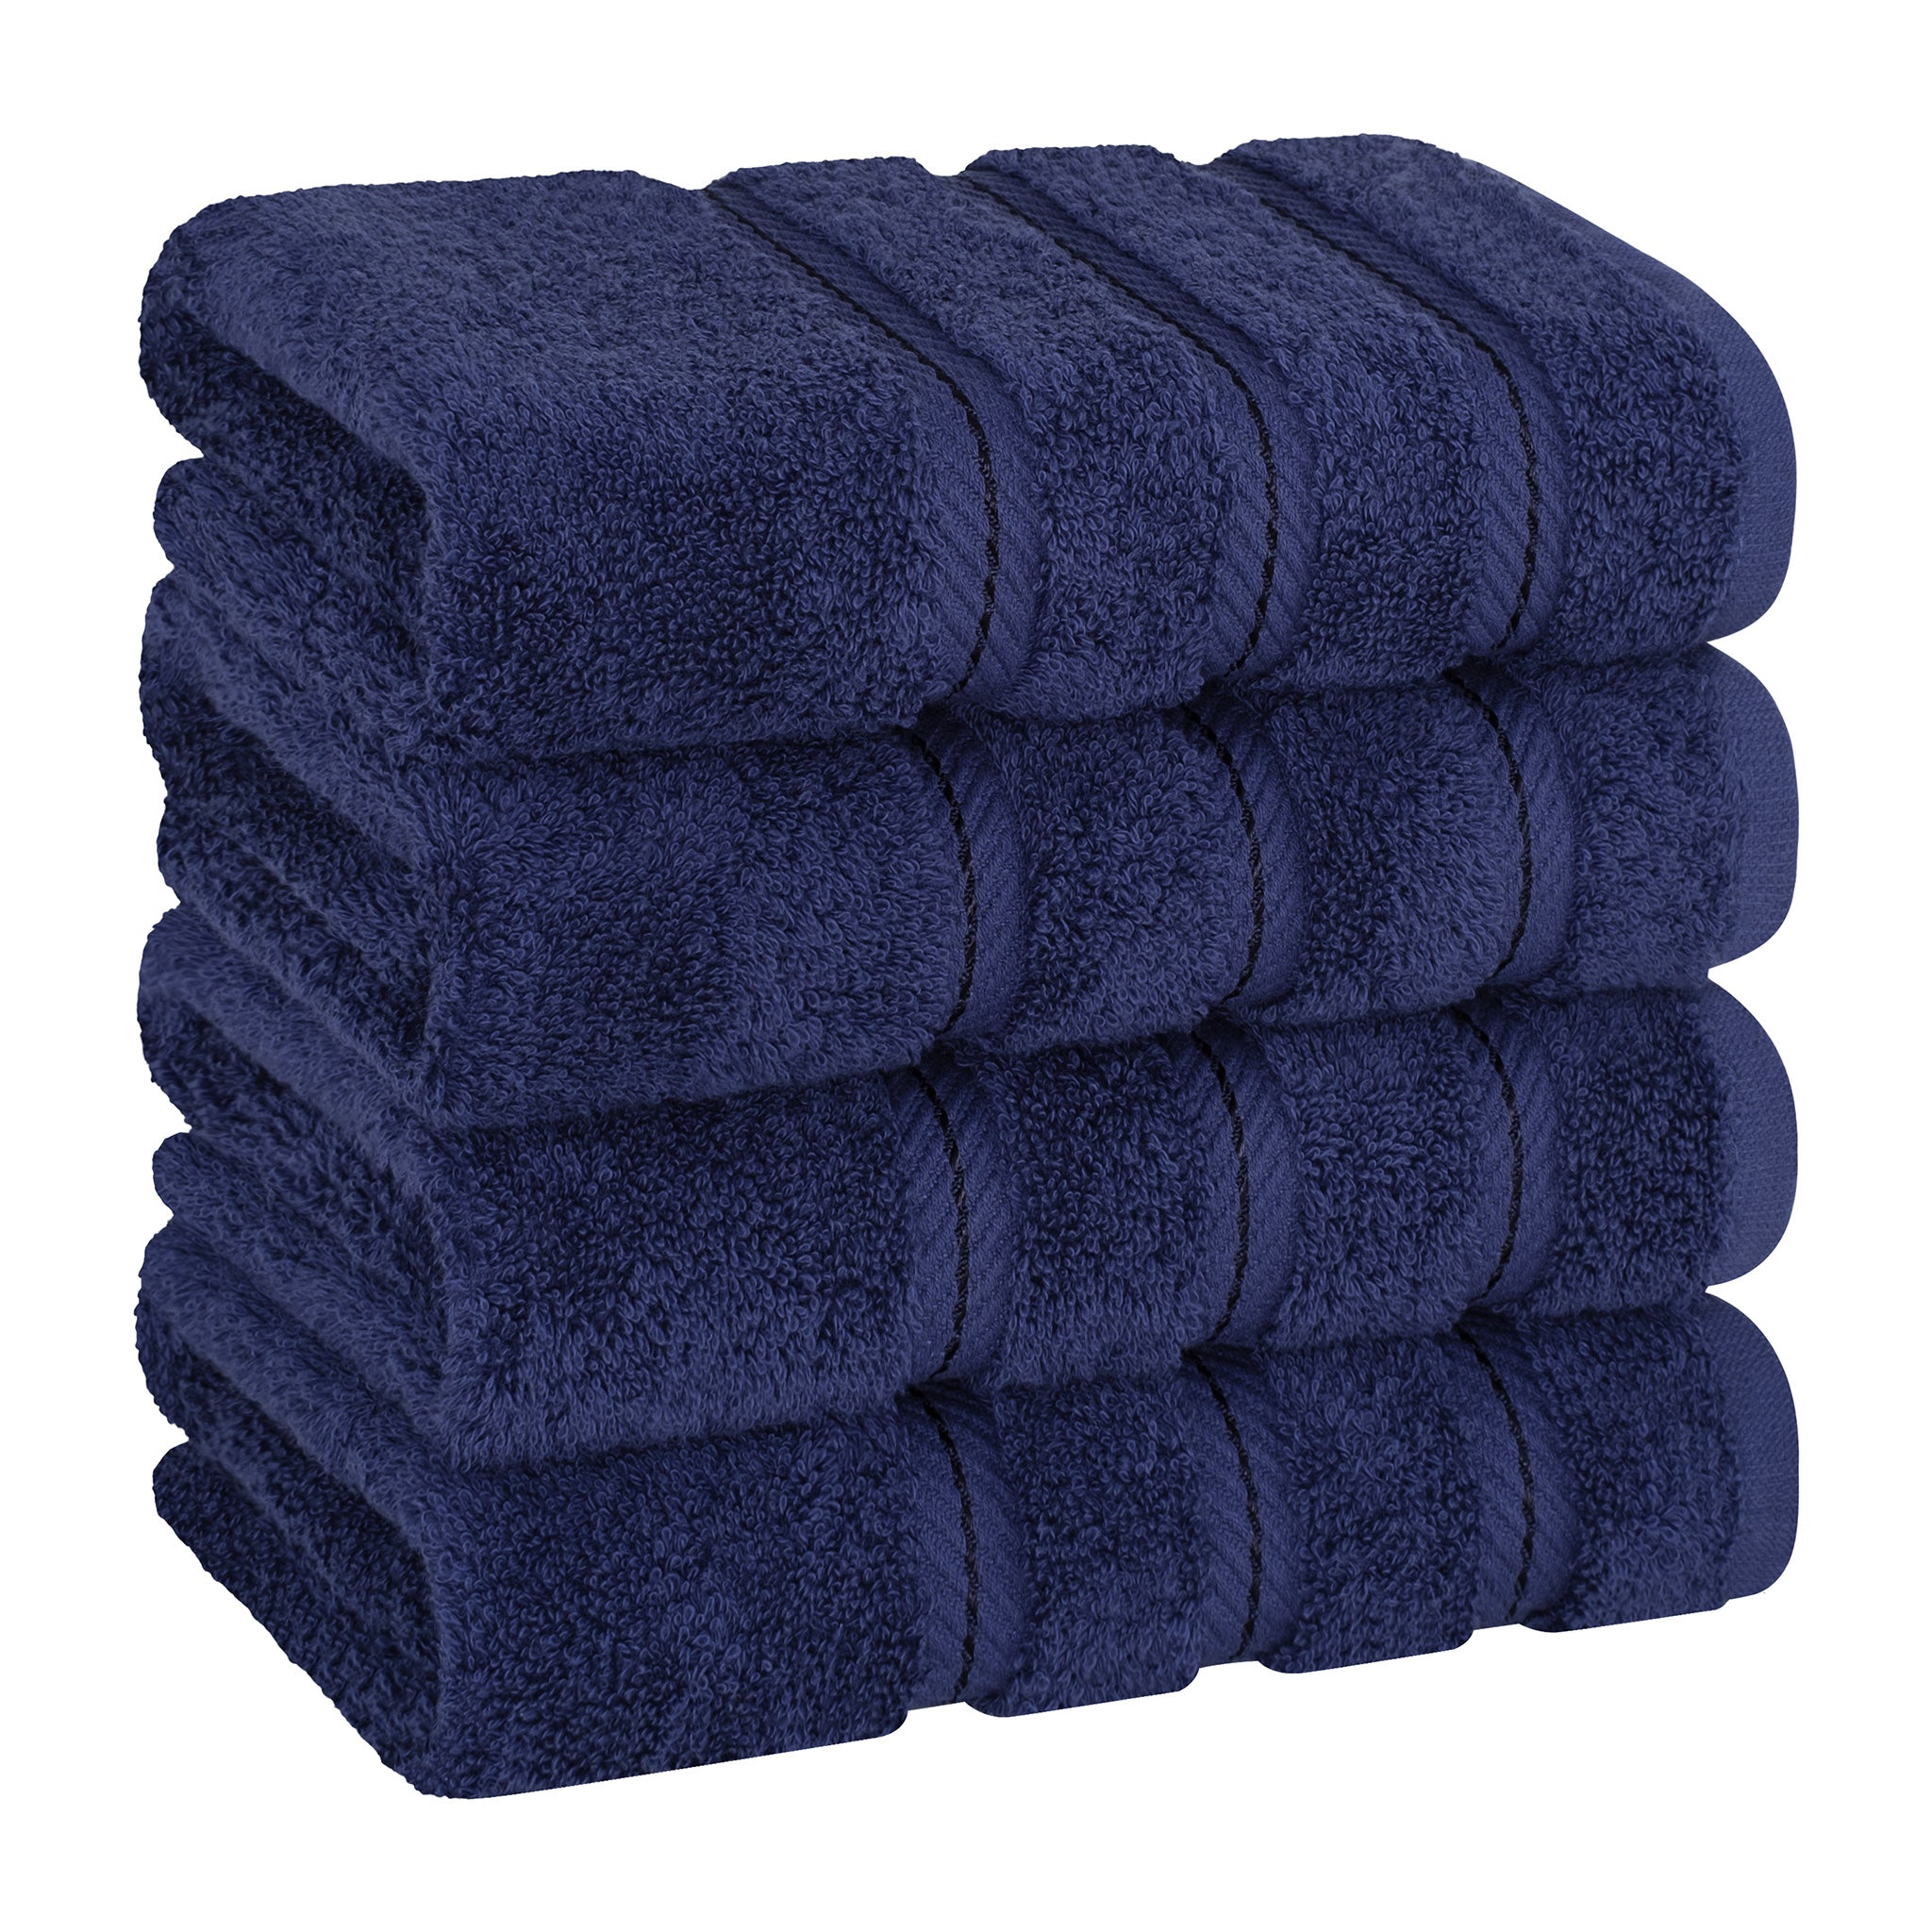  American Soft Linen 100% Turkish Cotton 4 Pack Hand Towel Set  navy-blue-1